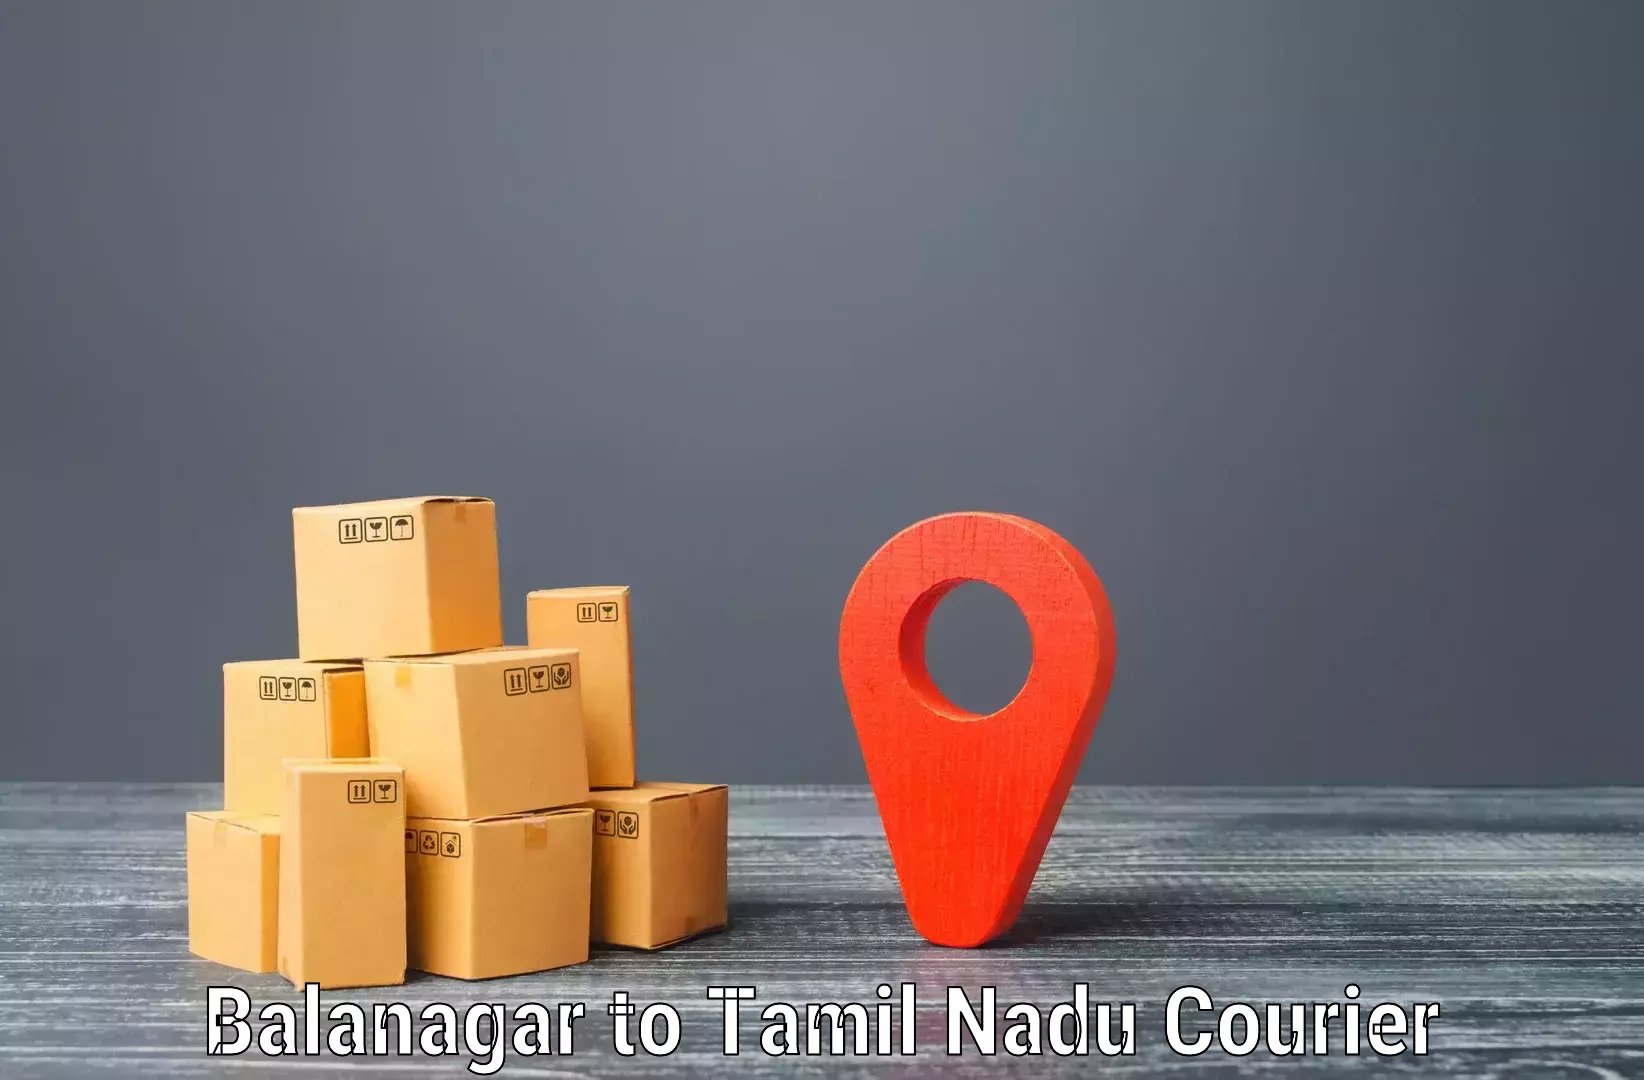 Nationwide delivery network Balanagar to Palayankottai